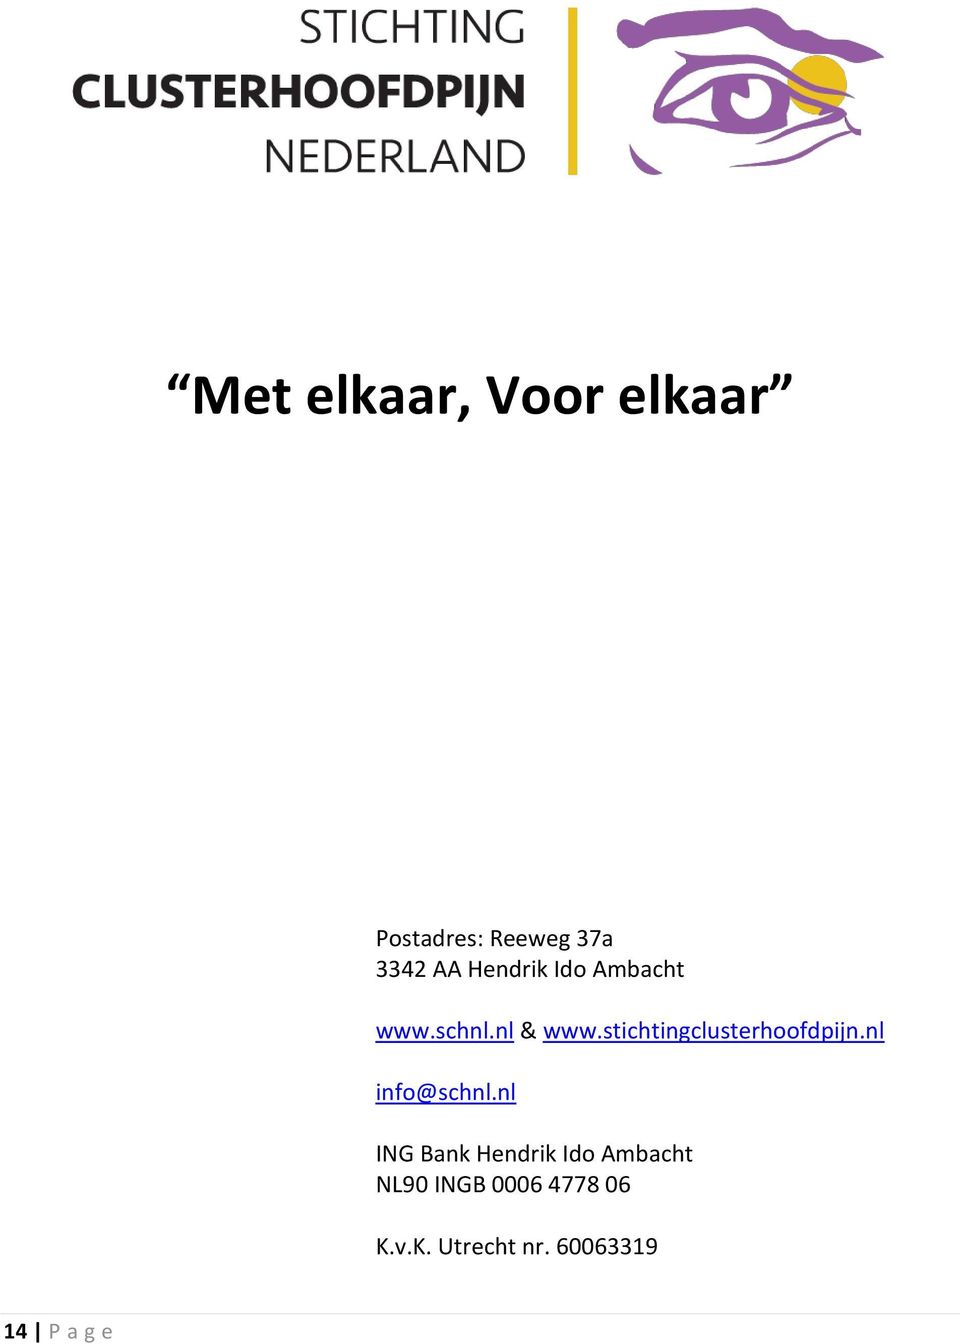 stichtingclusterhoofdpijn.nl info@schnl.